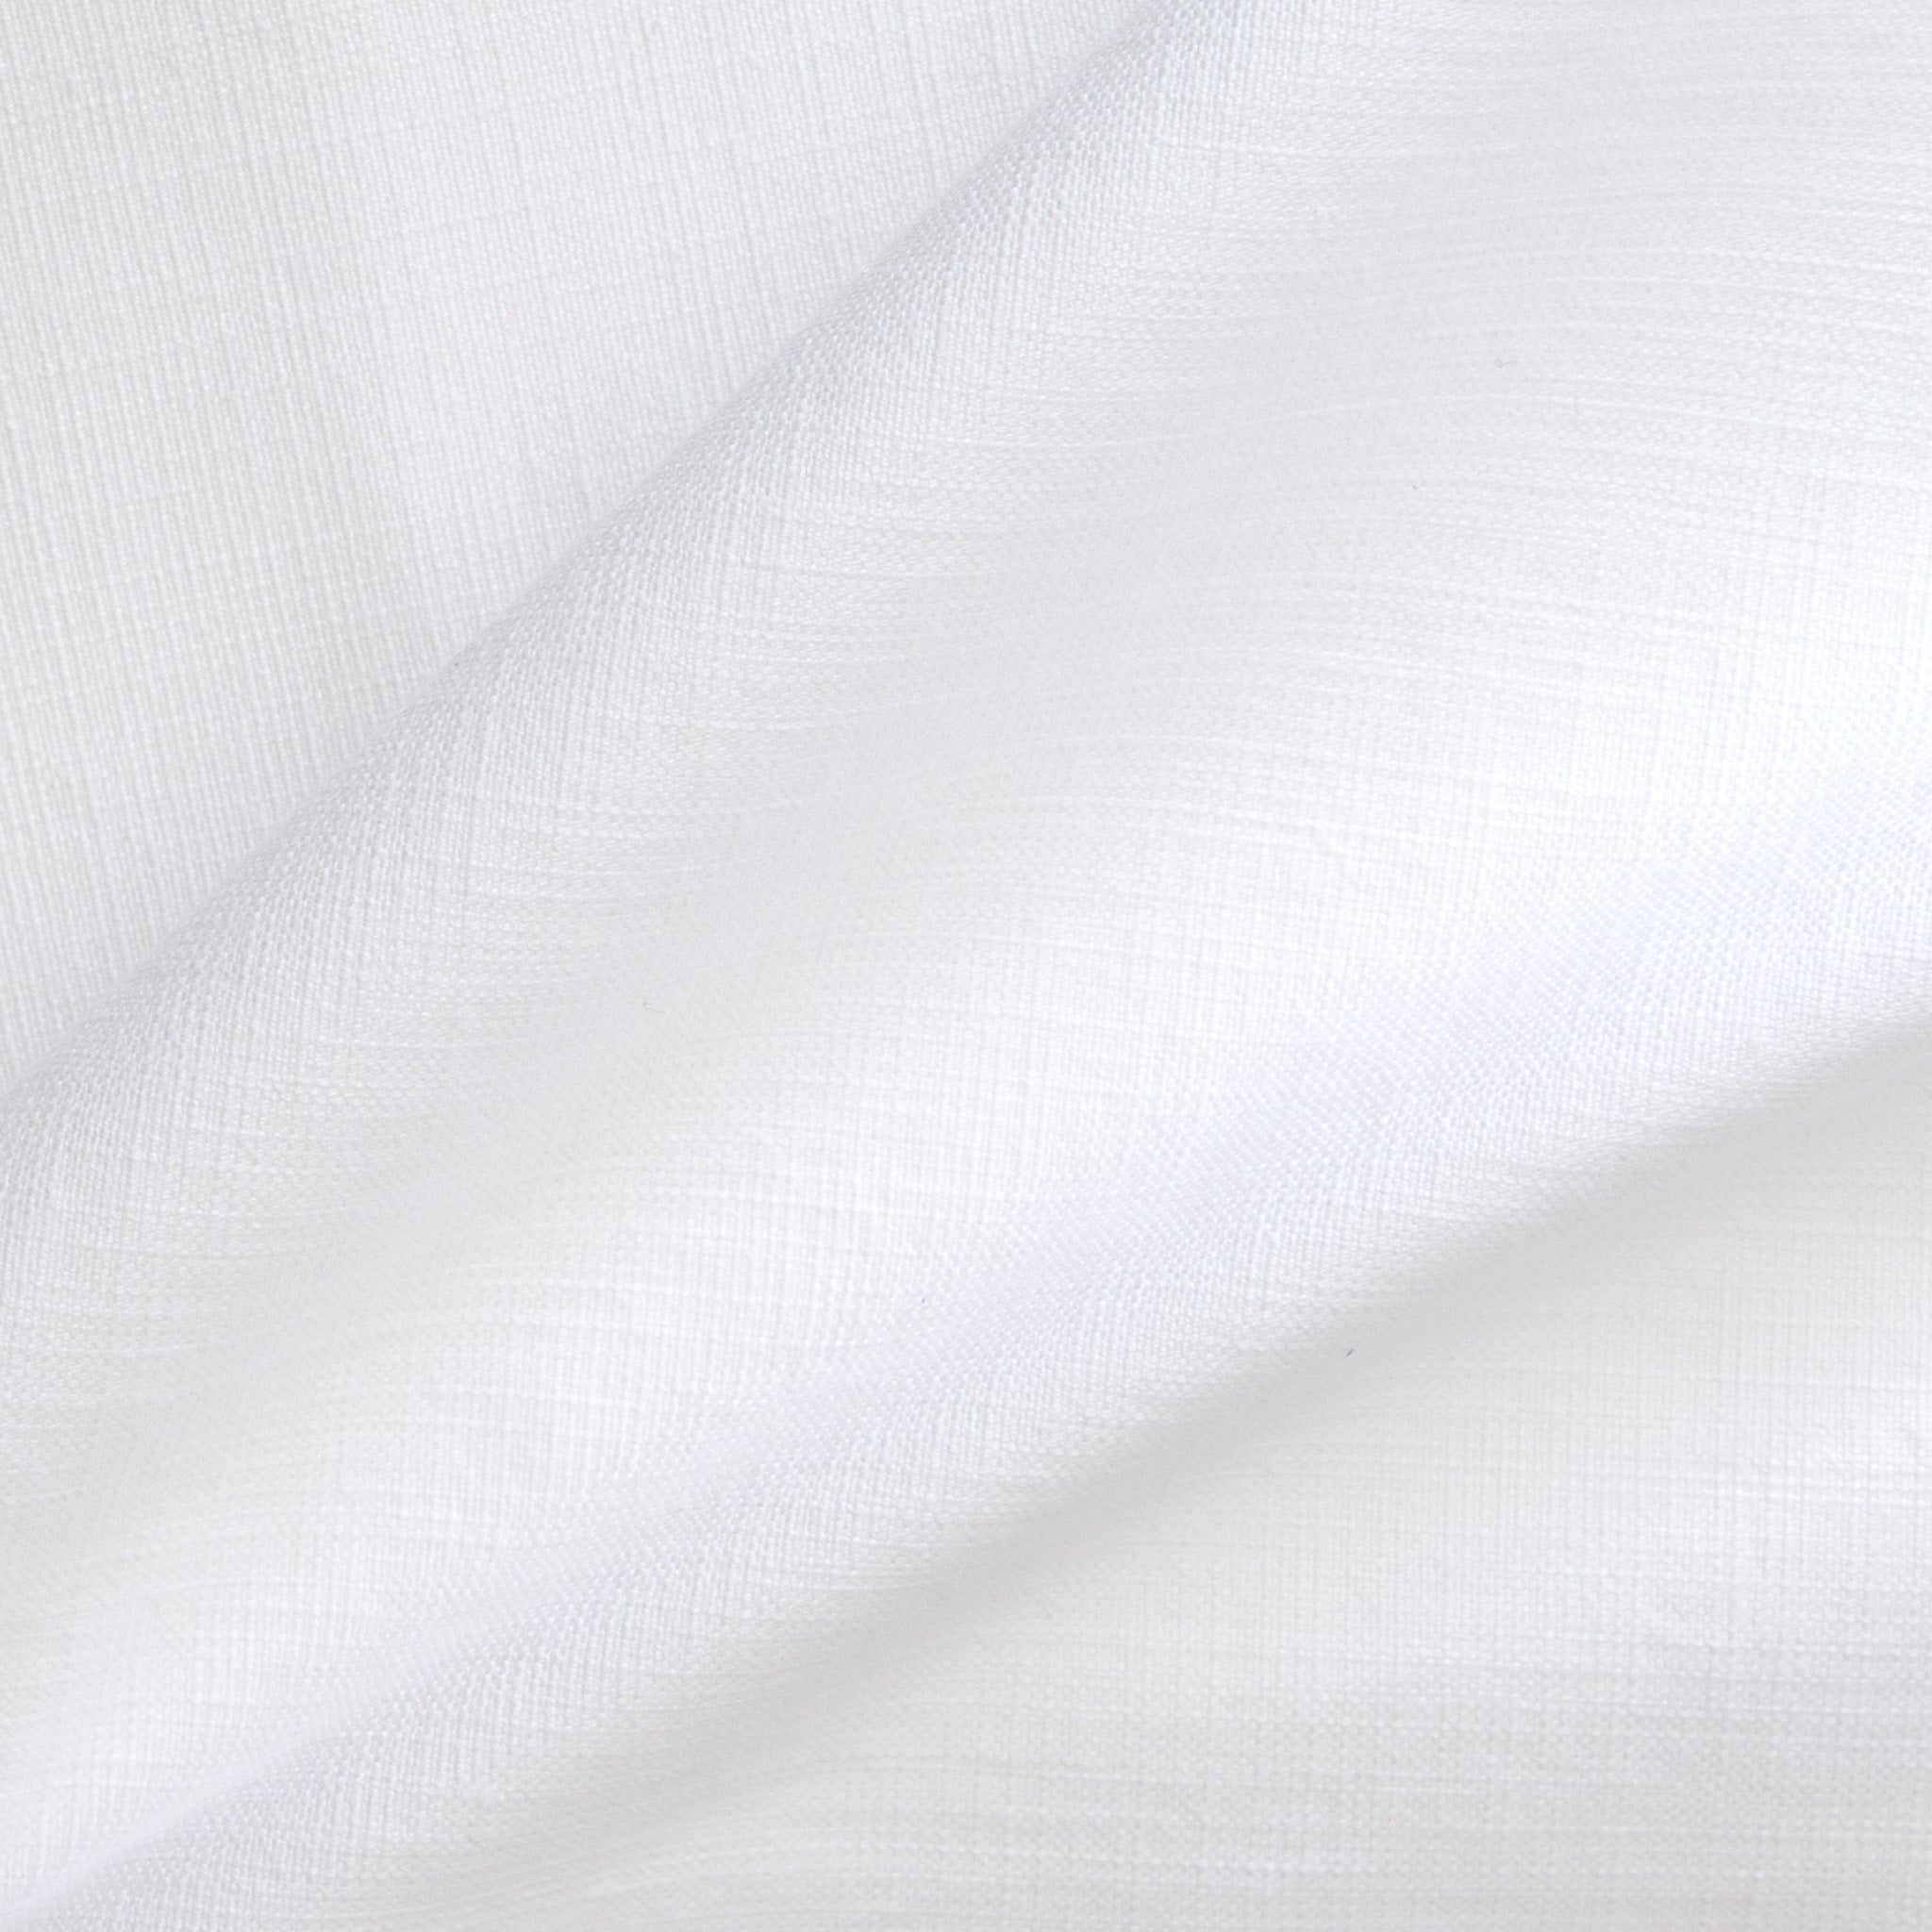 White Cotton Fabric Close-up